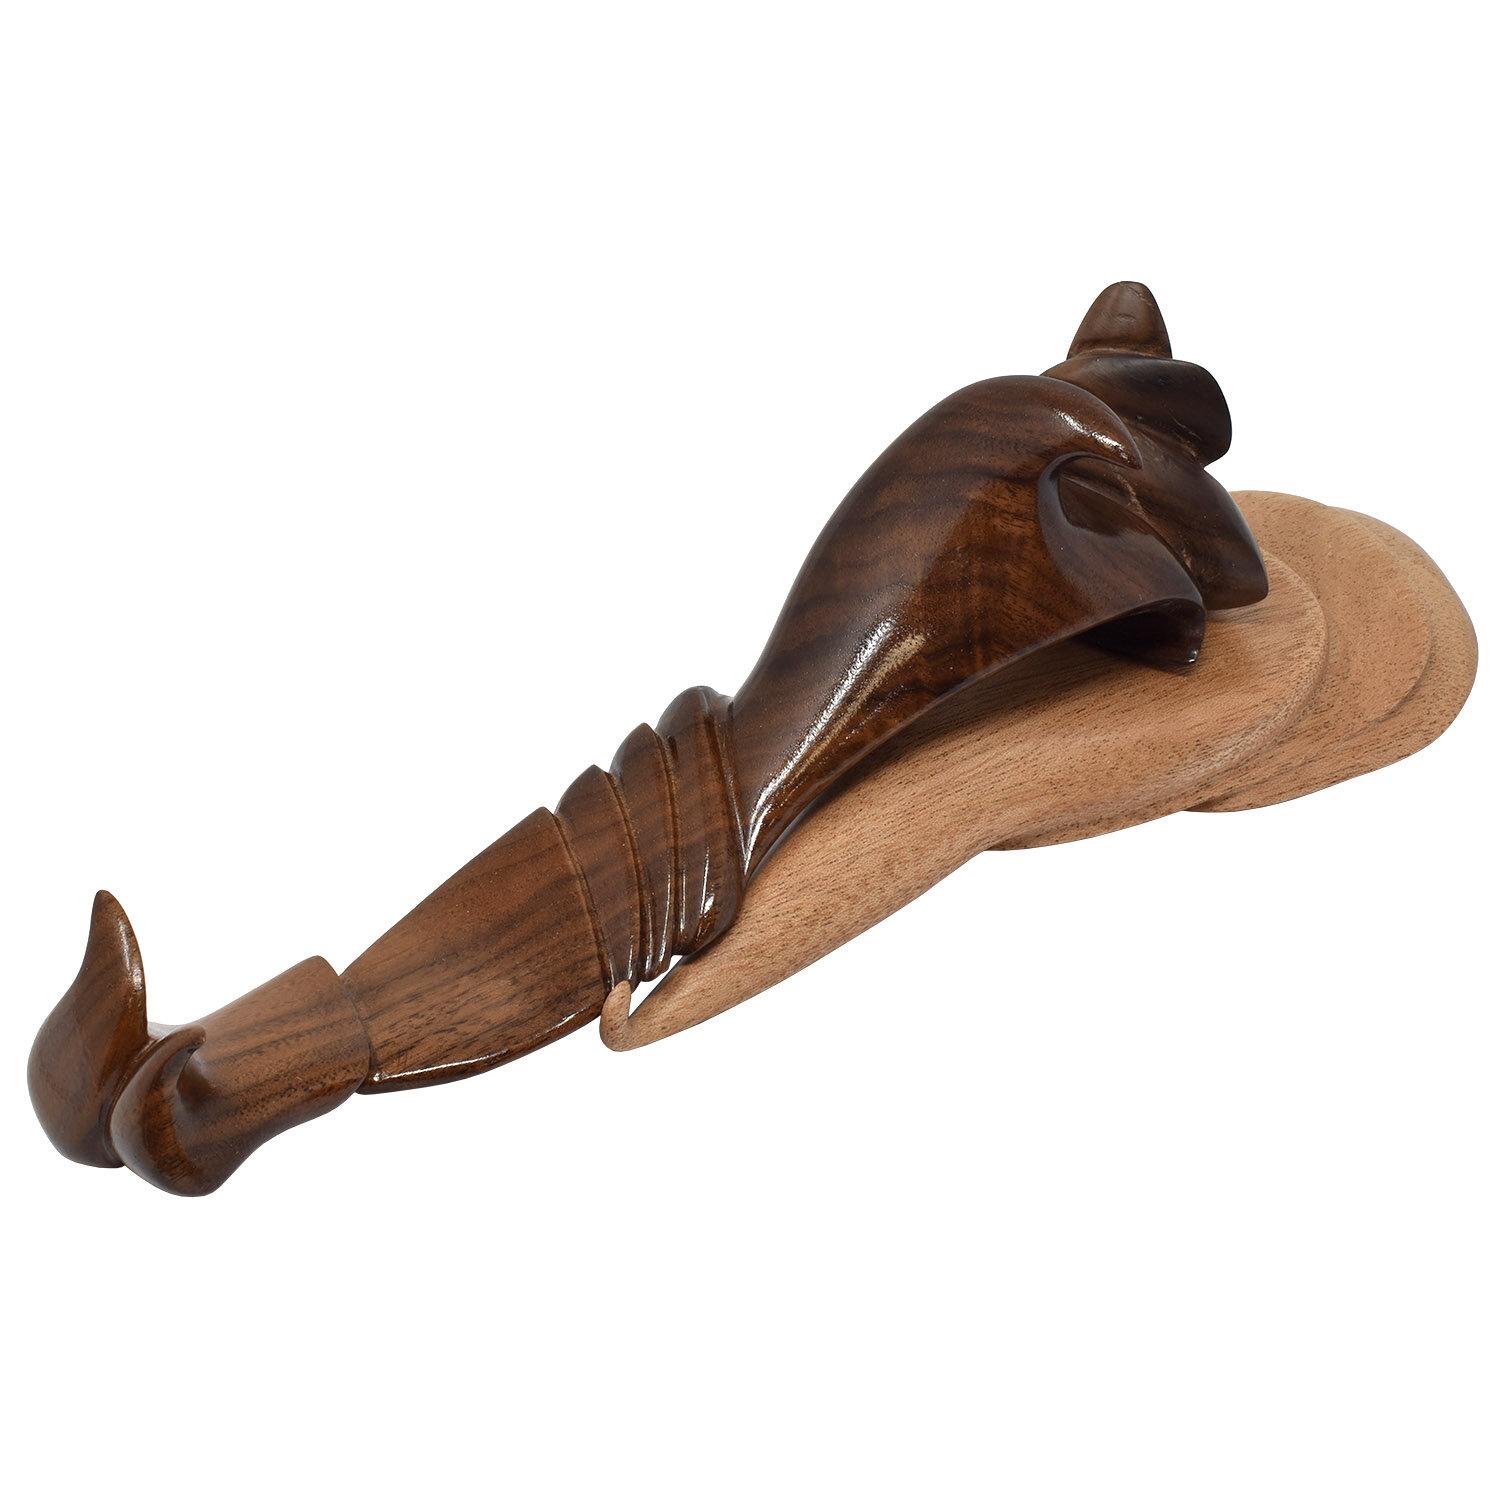 Original wood sculpture

2021

Walnut and African mahogany

Measures: 10.5 L x 2.75 W x 3 H in. / 27 x 7 x 8 cm.